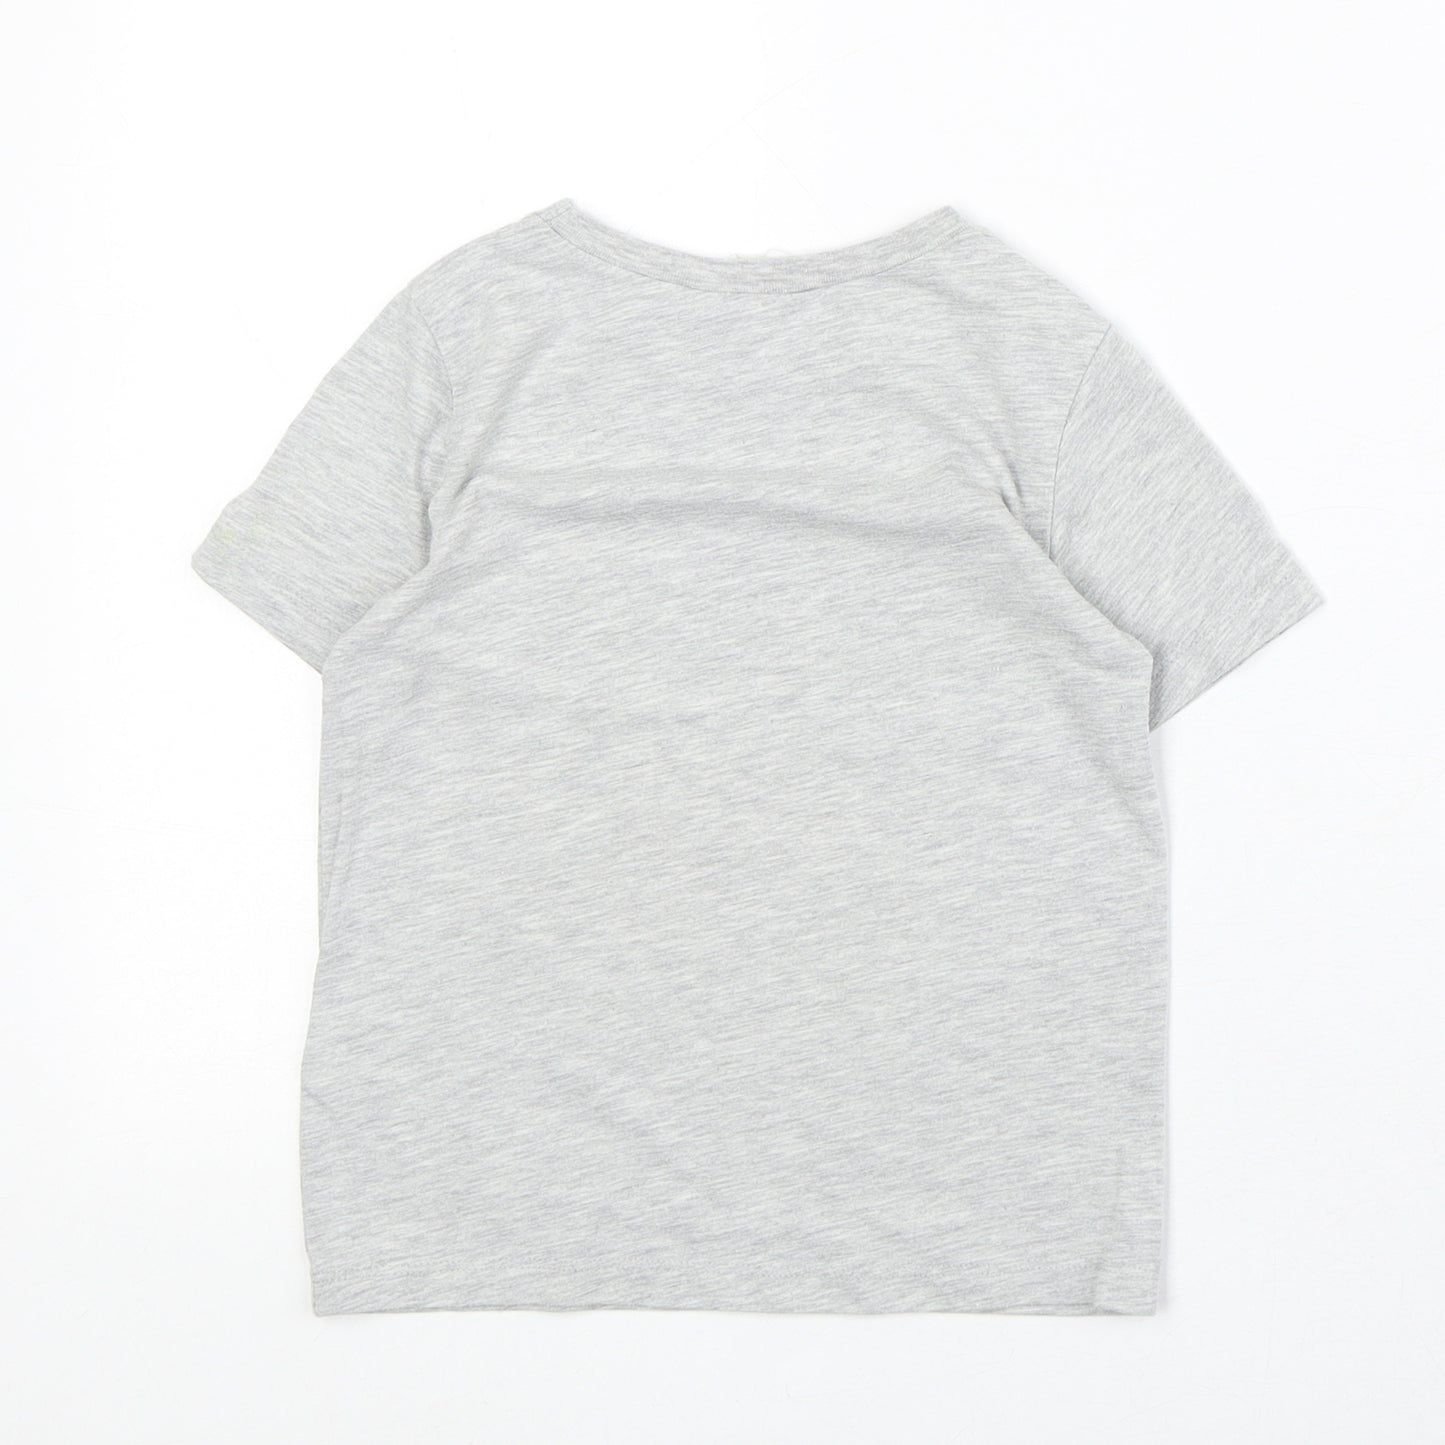 H&M Boys Grey Cotton Basic T-Shirt Size 4-5 Years Round Neck Pullover - Super Hero Marvel